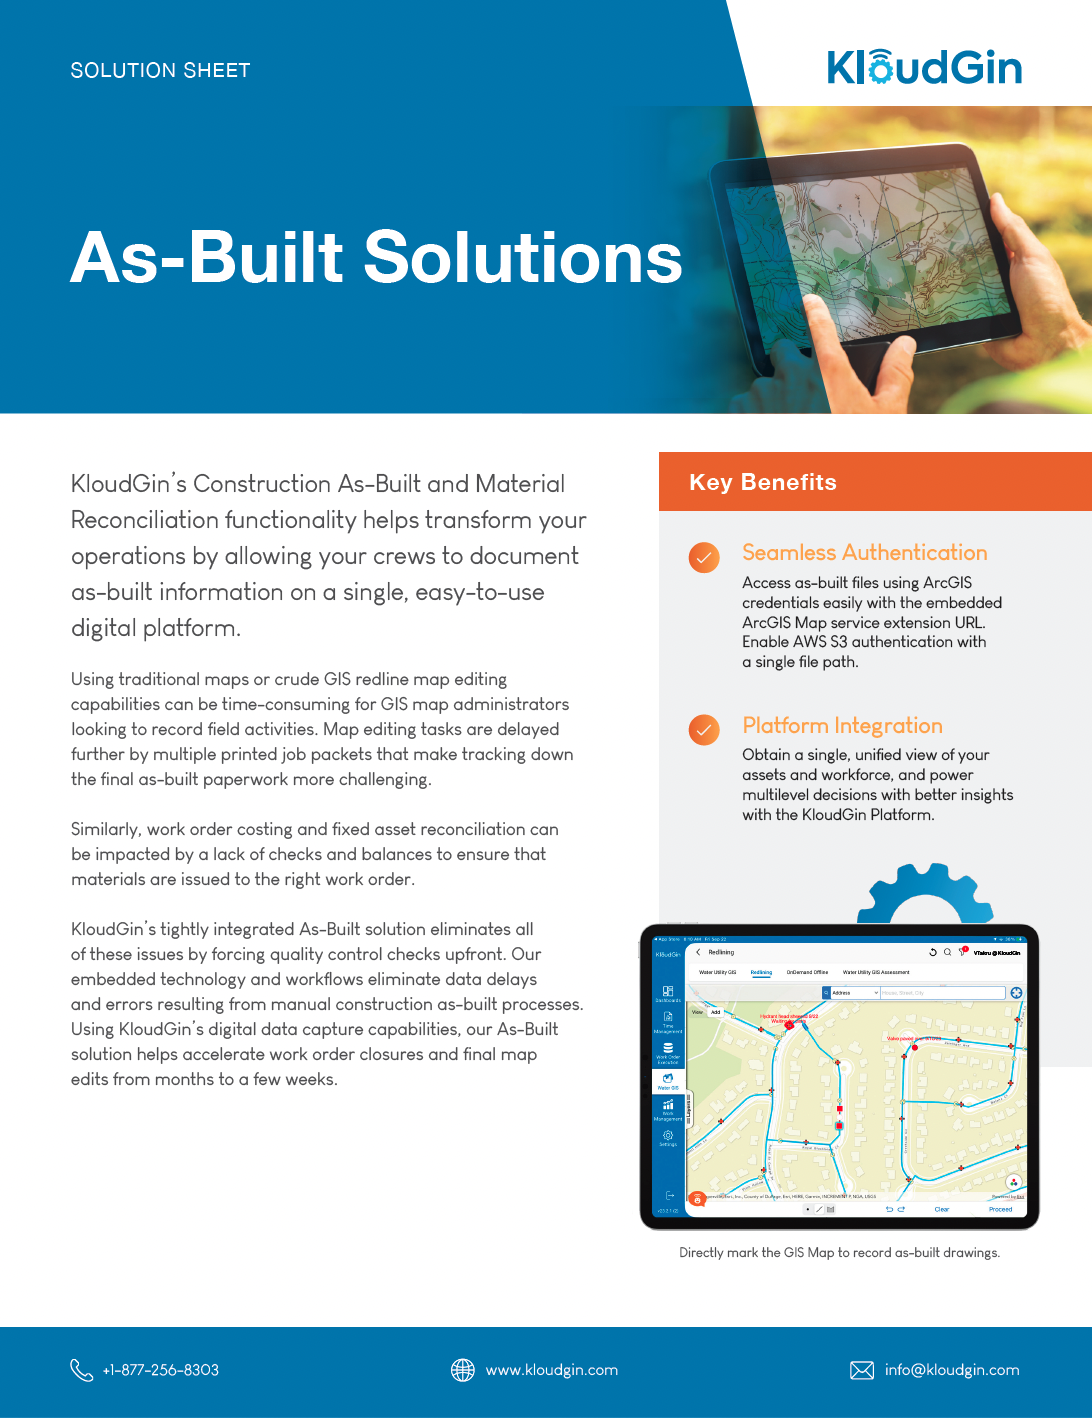 kloudgin as-built solutions brochure